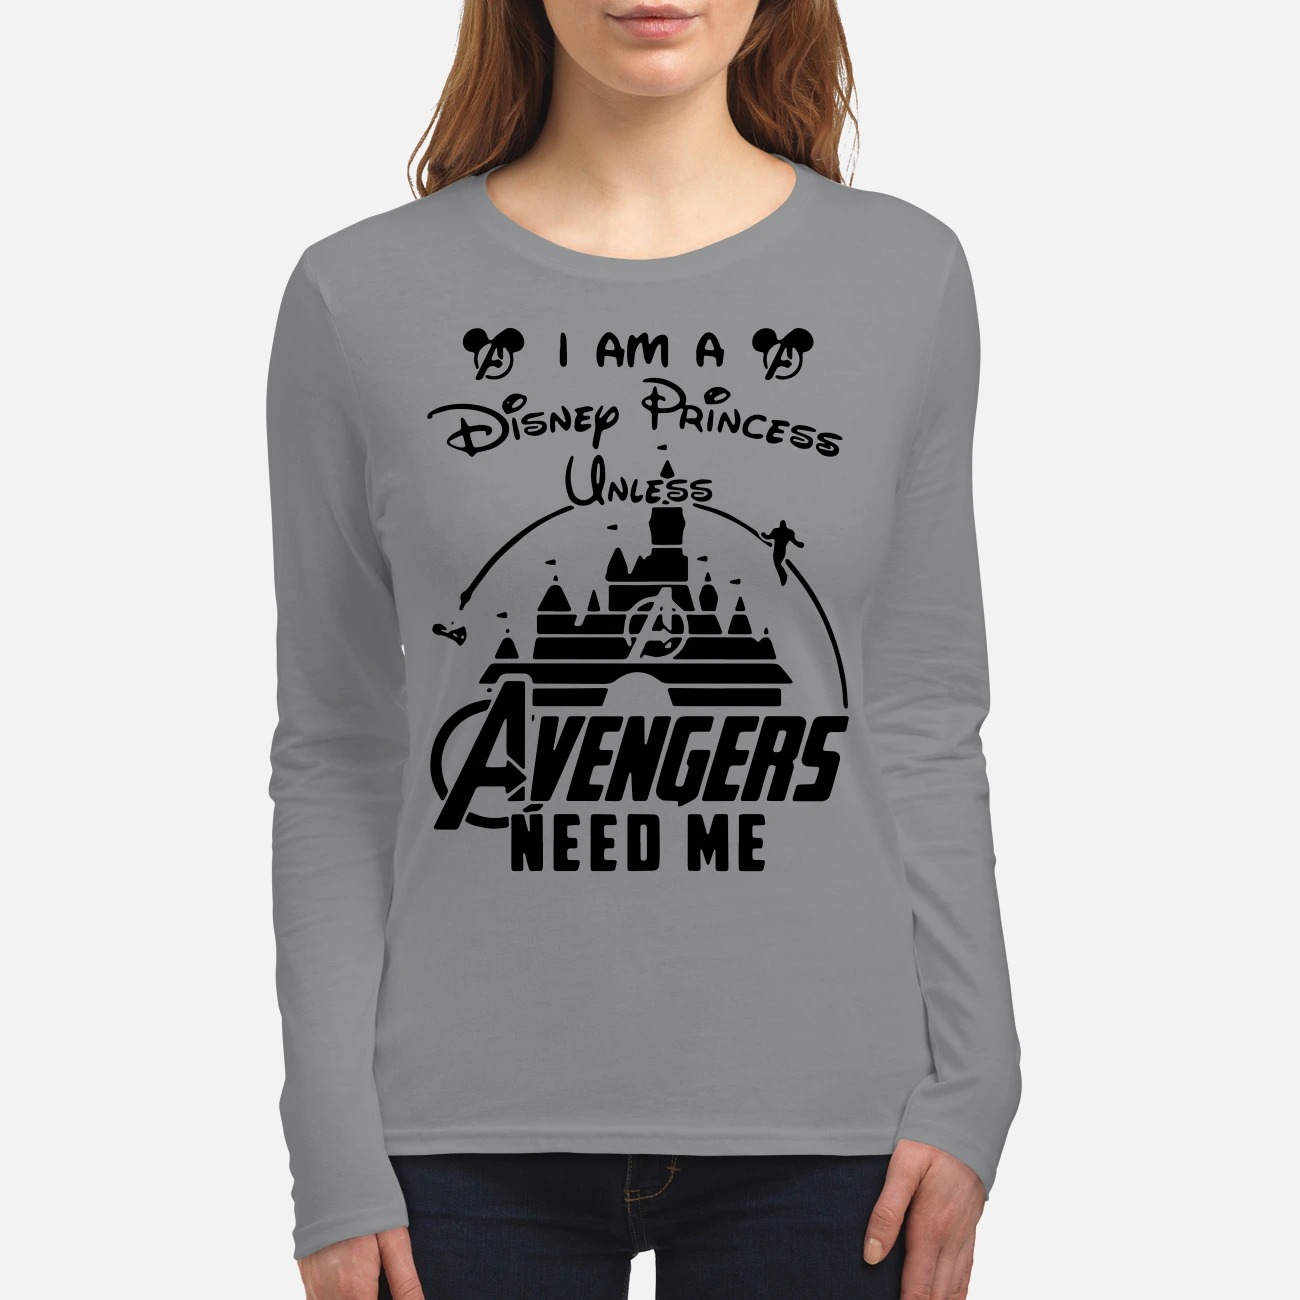 I am a Disney Princess unless Avengers need me women's long sleeved shirt